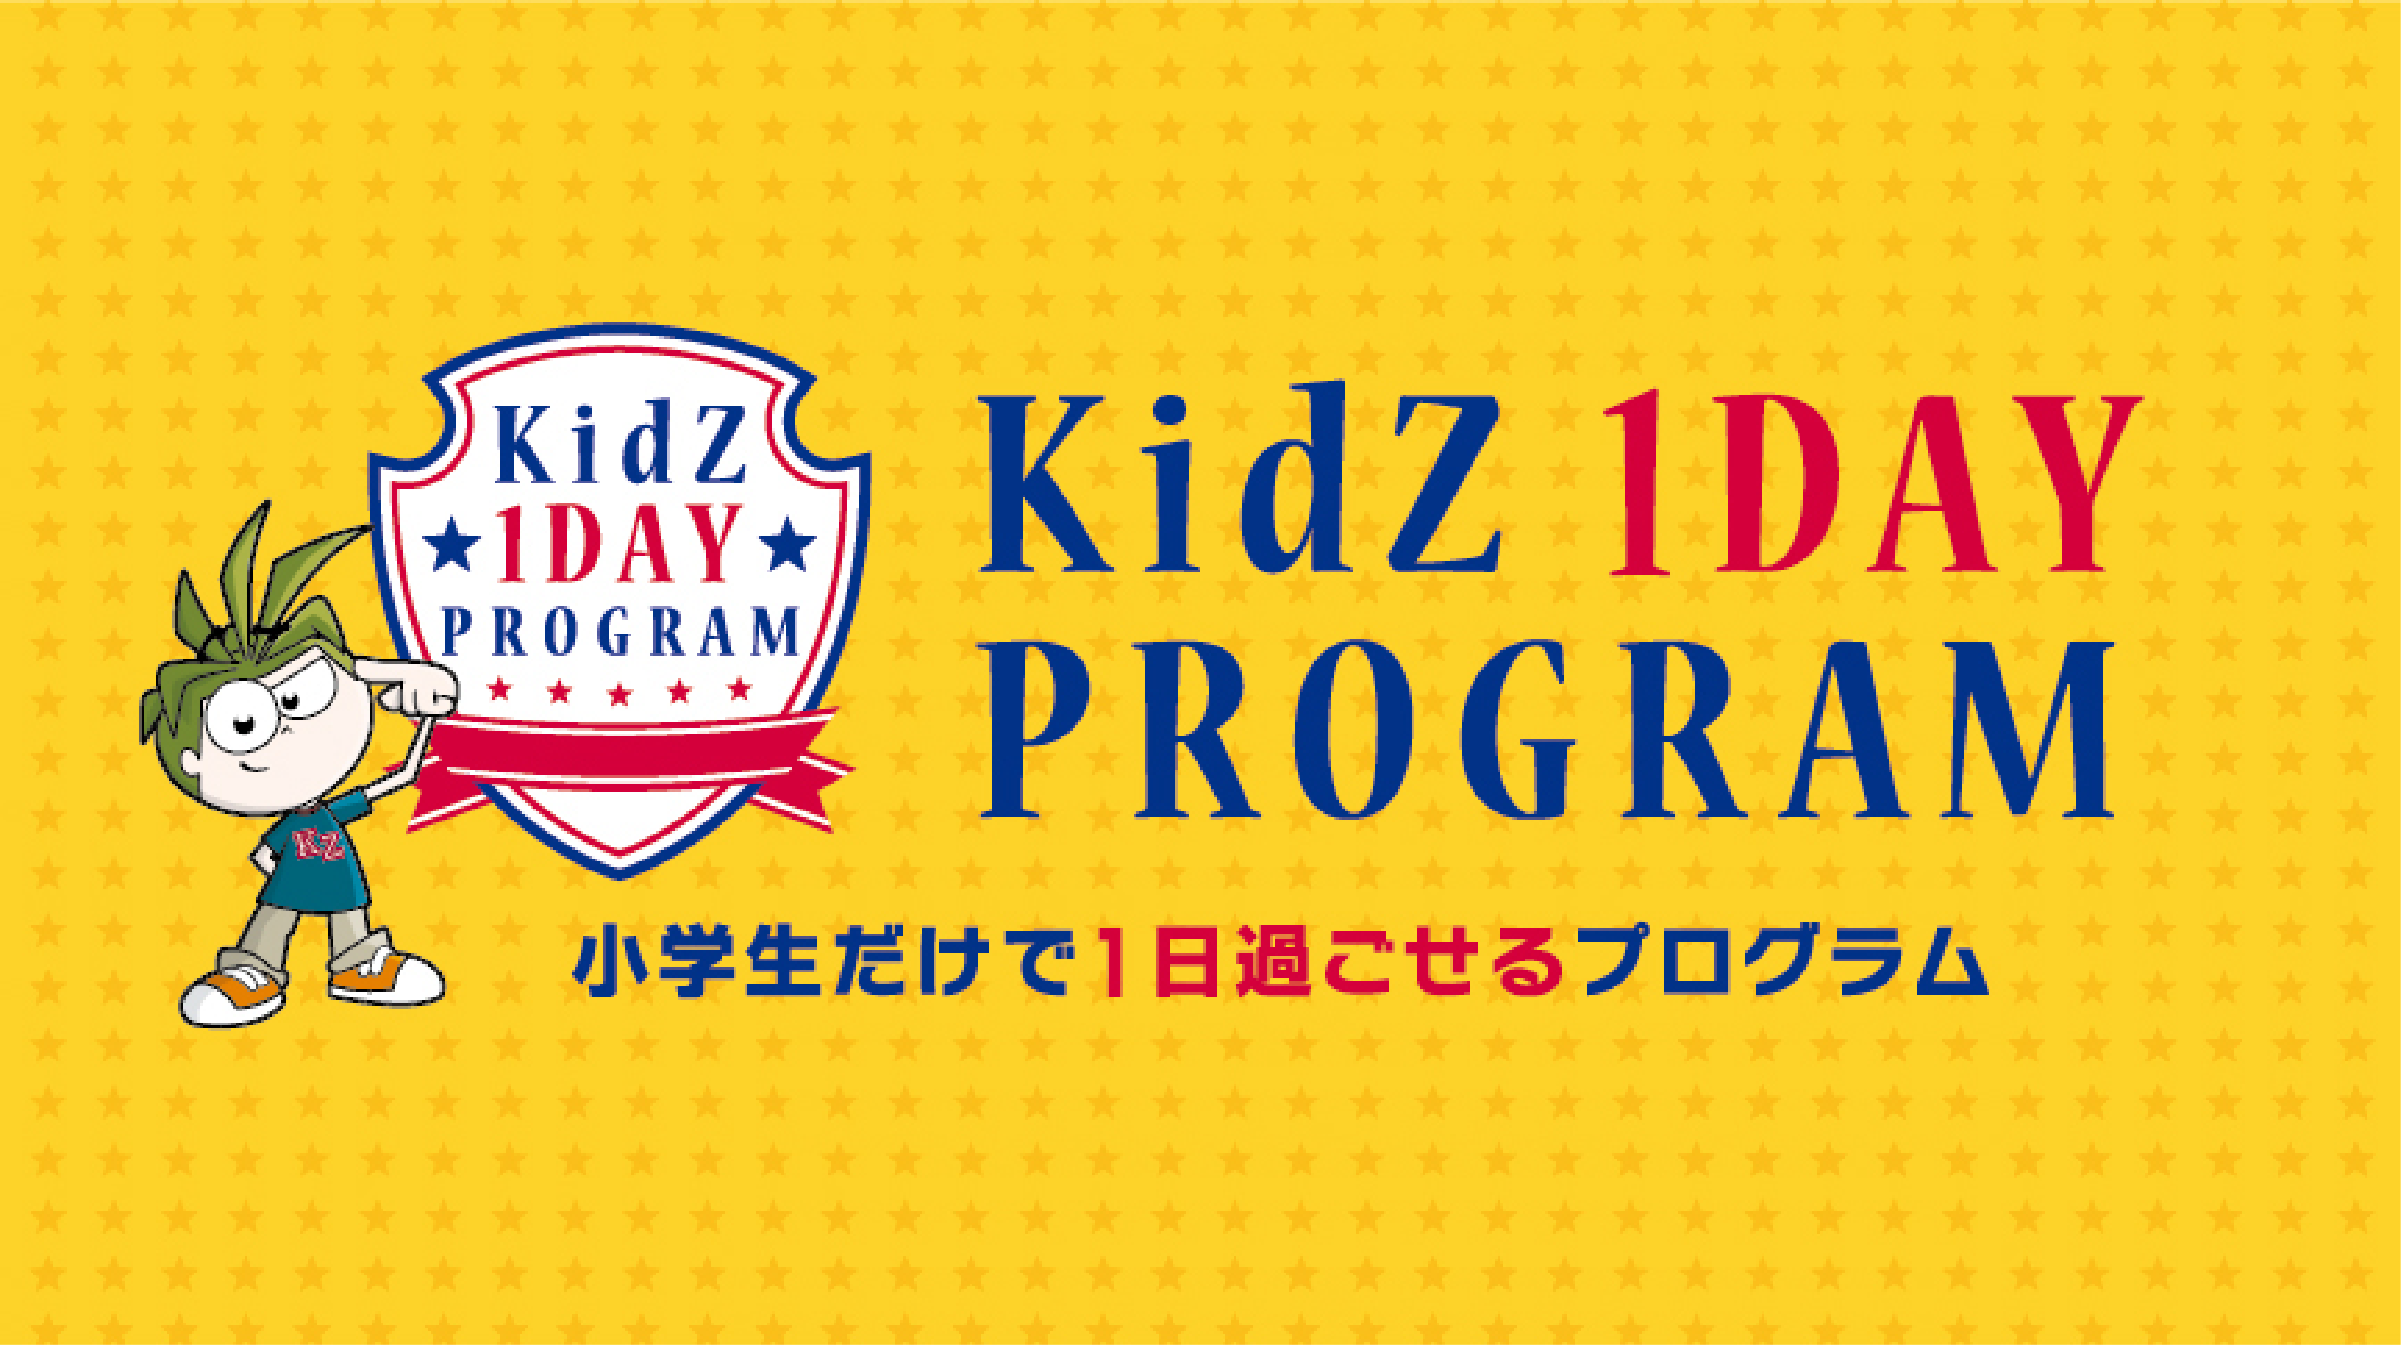 KidZ 1day program 小学生だけで一日過ごせるプログラム